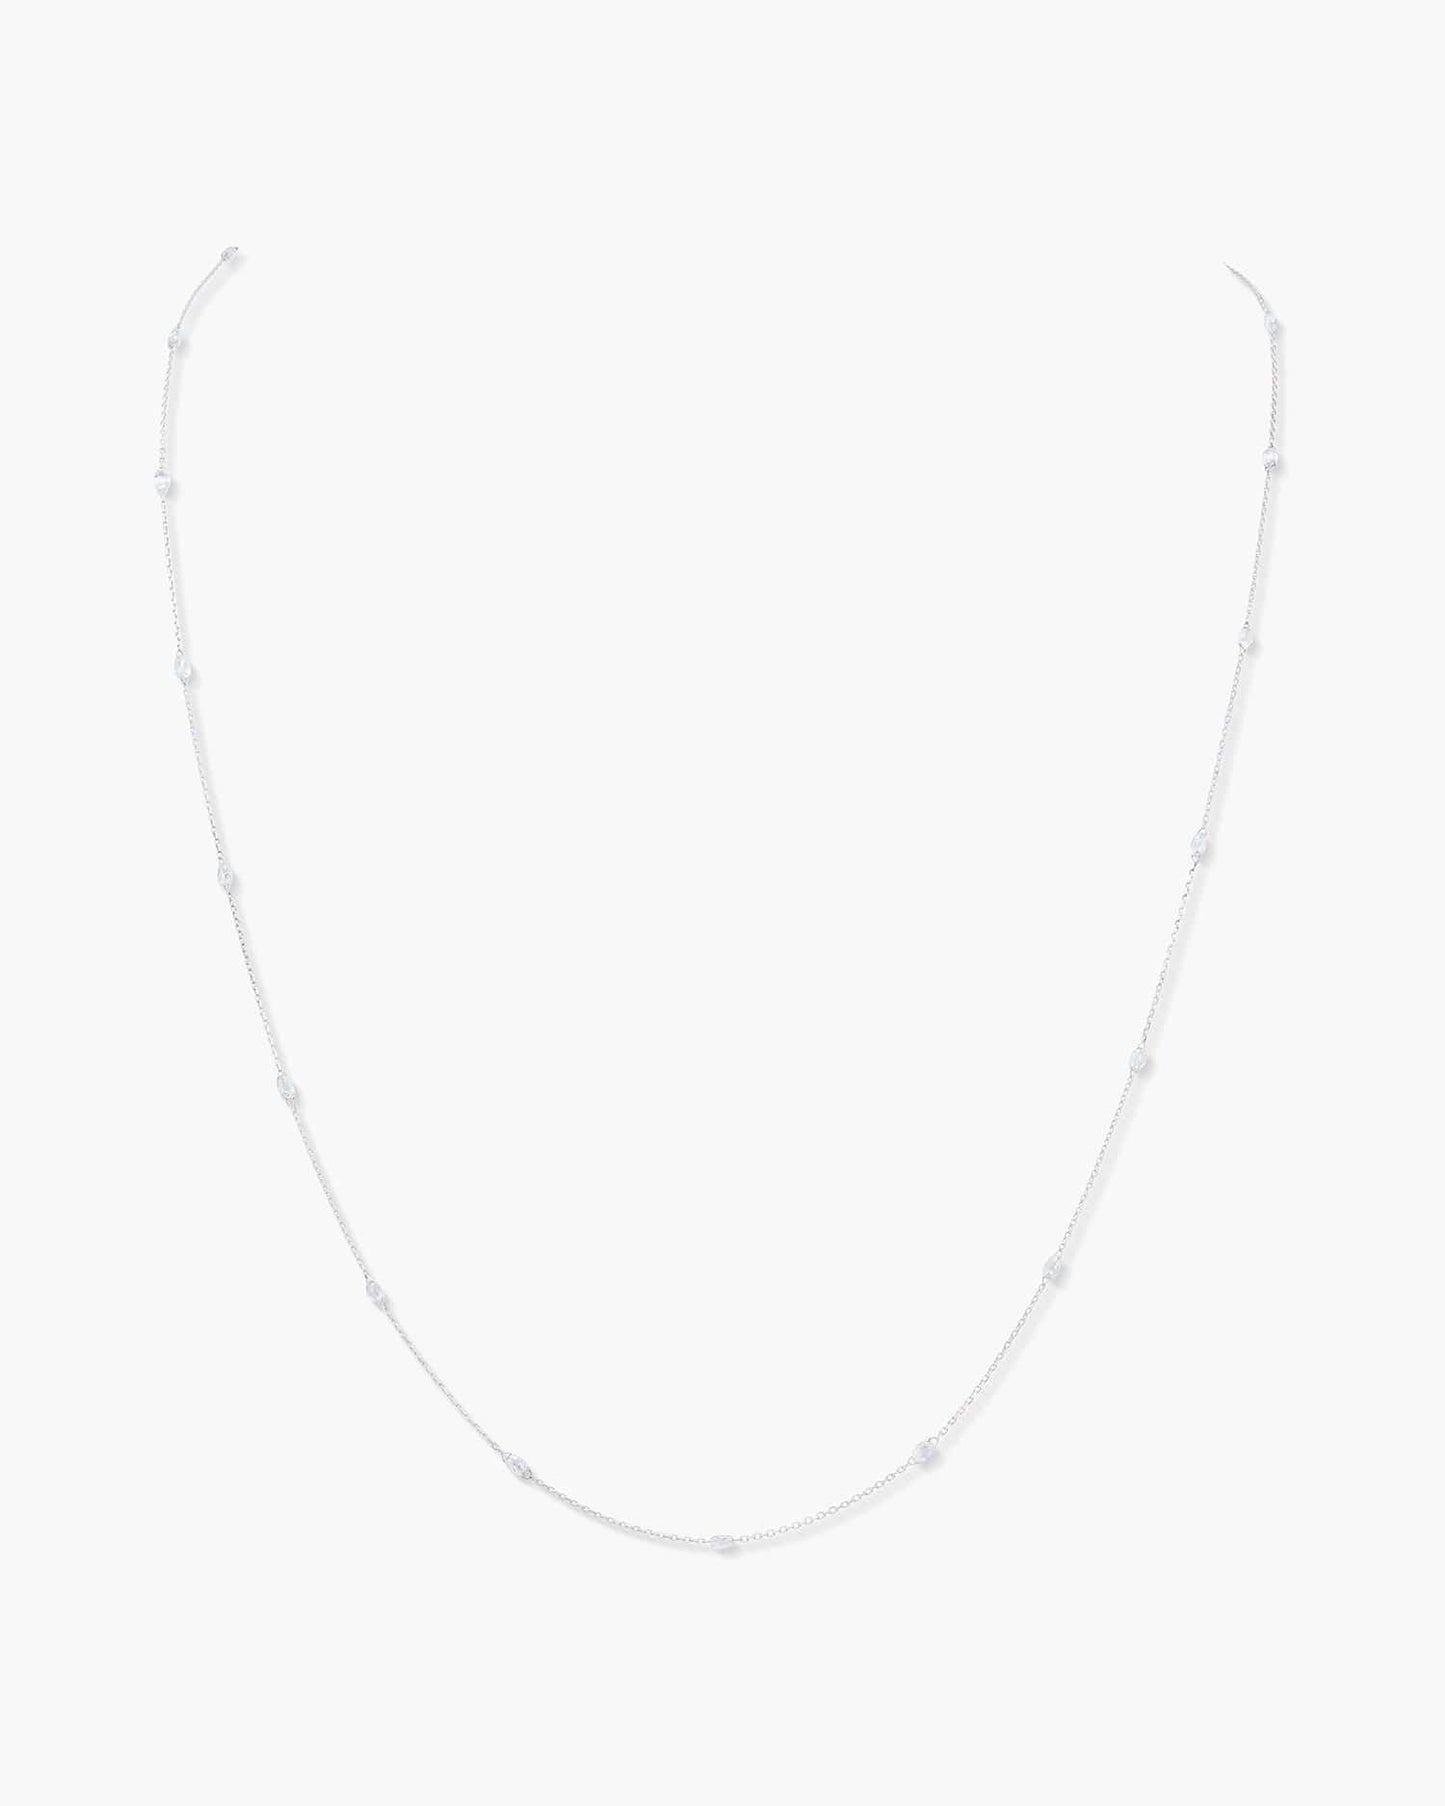 Briolette Diamond Necklace, 3.82 carats